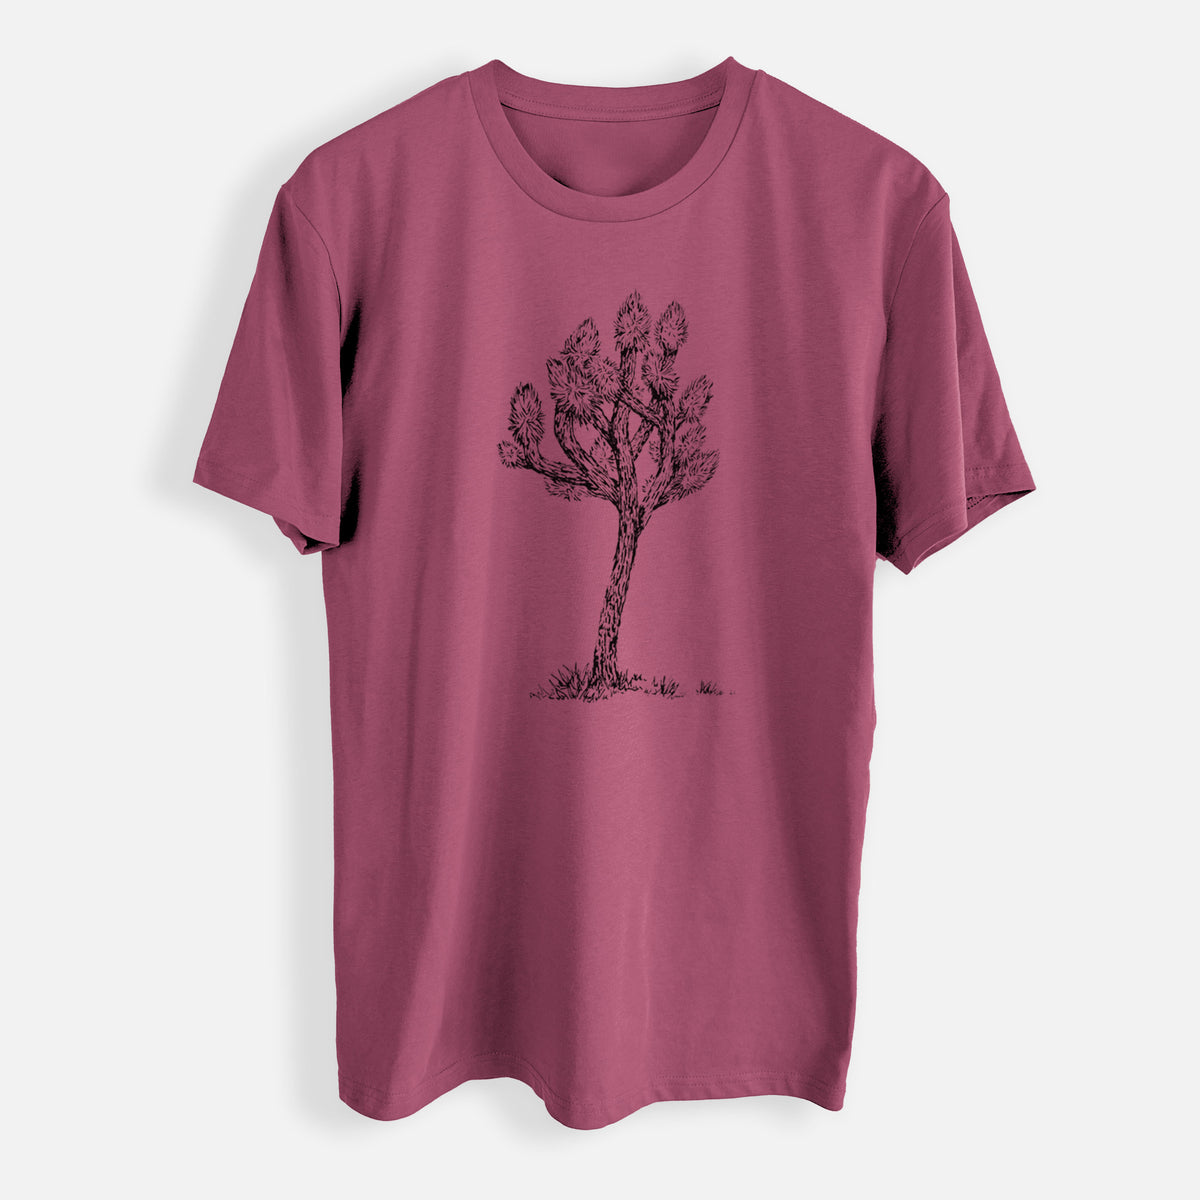 Yucca brevifolia - Joshua Tree - Mens Everyday Staple Tee